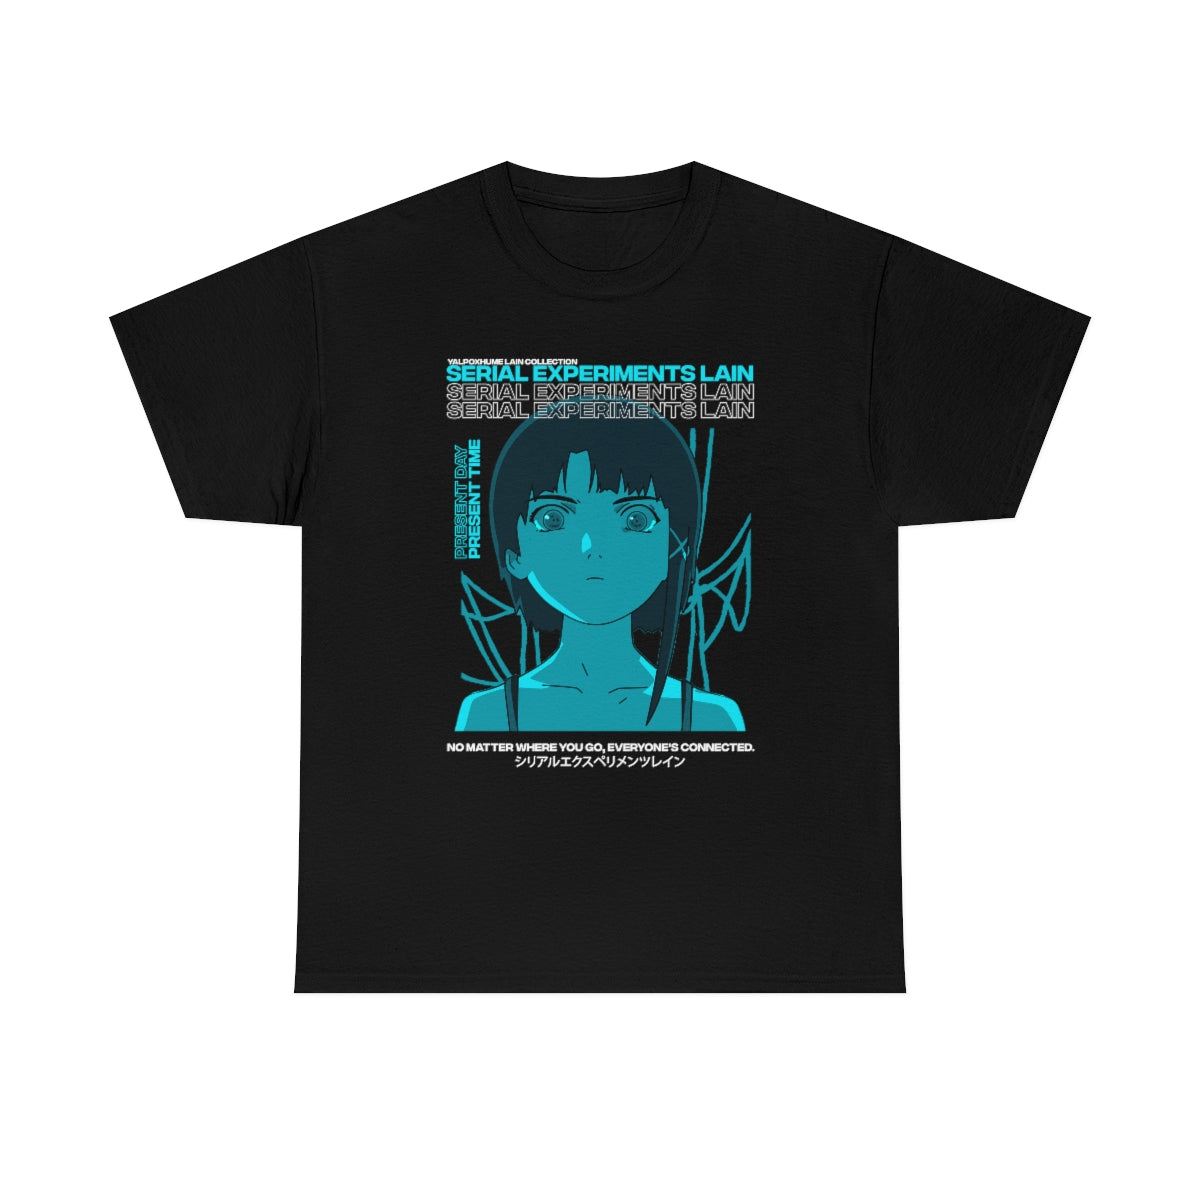 Serial Experiments Lain Shirt, Science Fiction Anime Shirt, Anime Gift, Cyberpunk, Lain, Vaporwave, Aesthetic T Shirt, Grunge